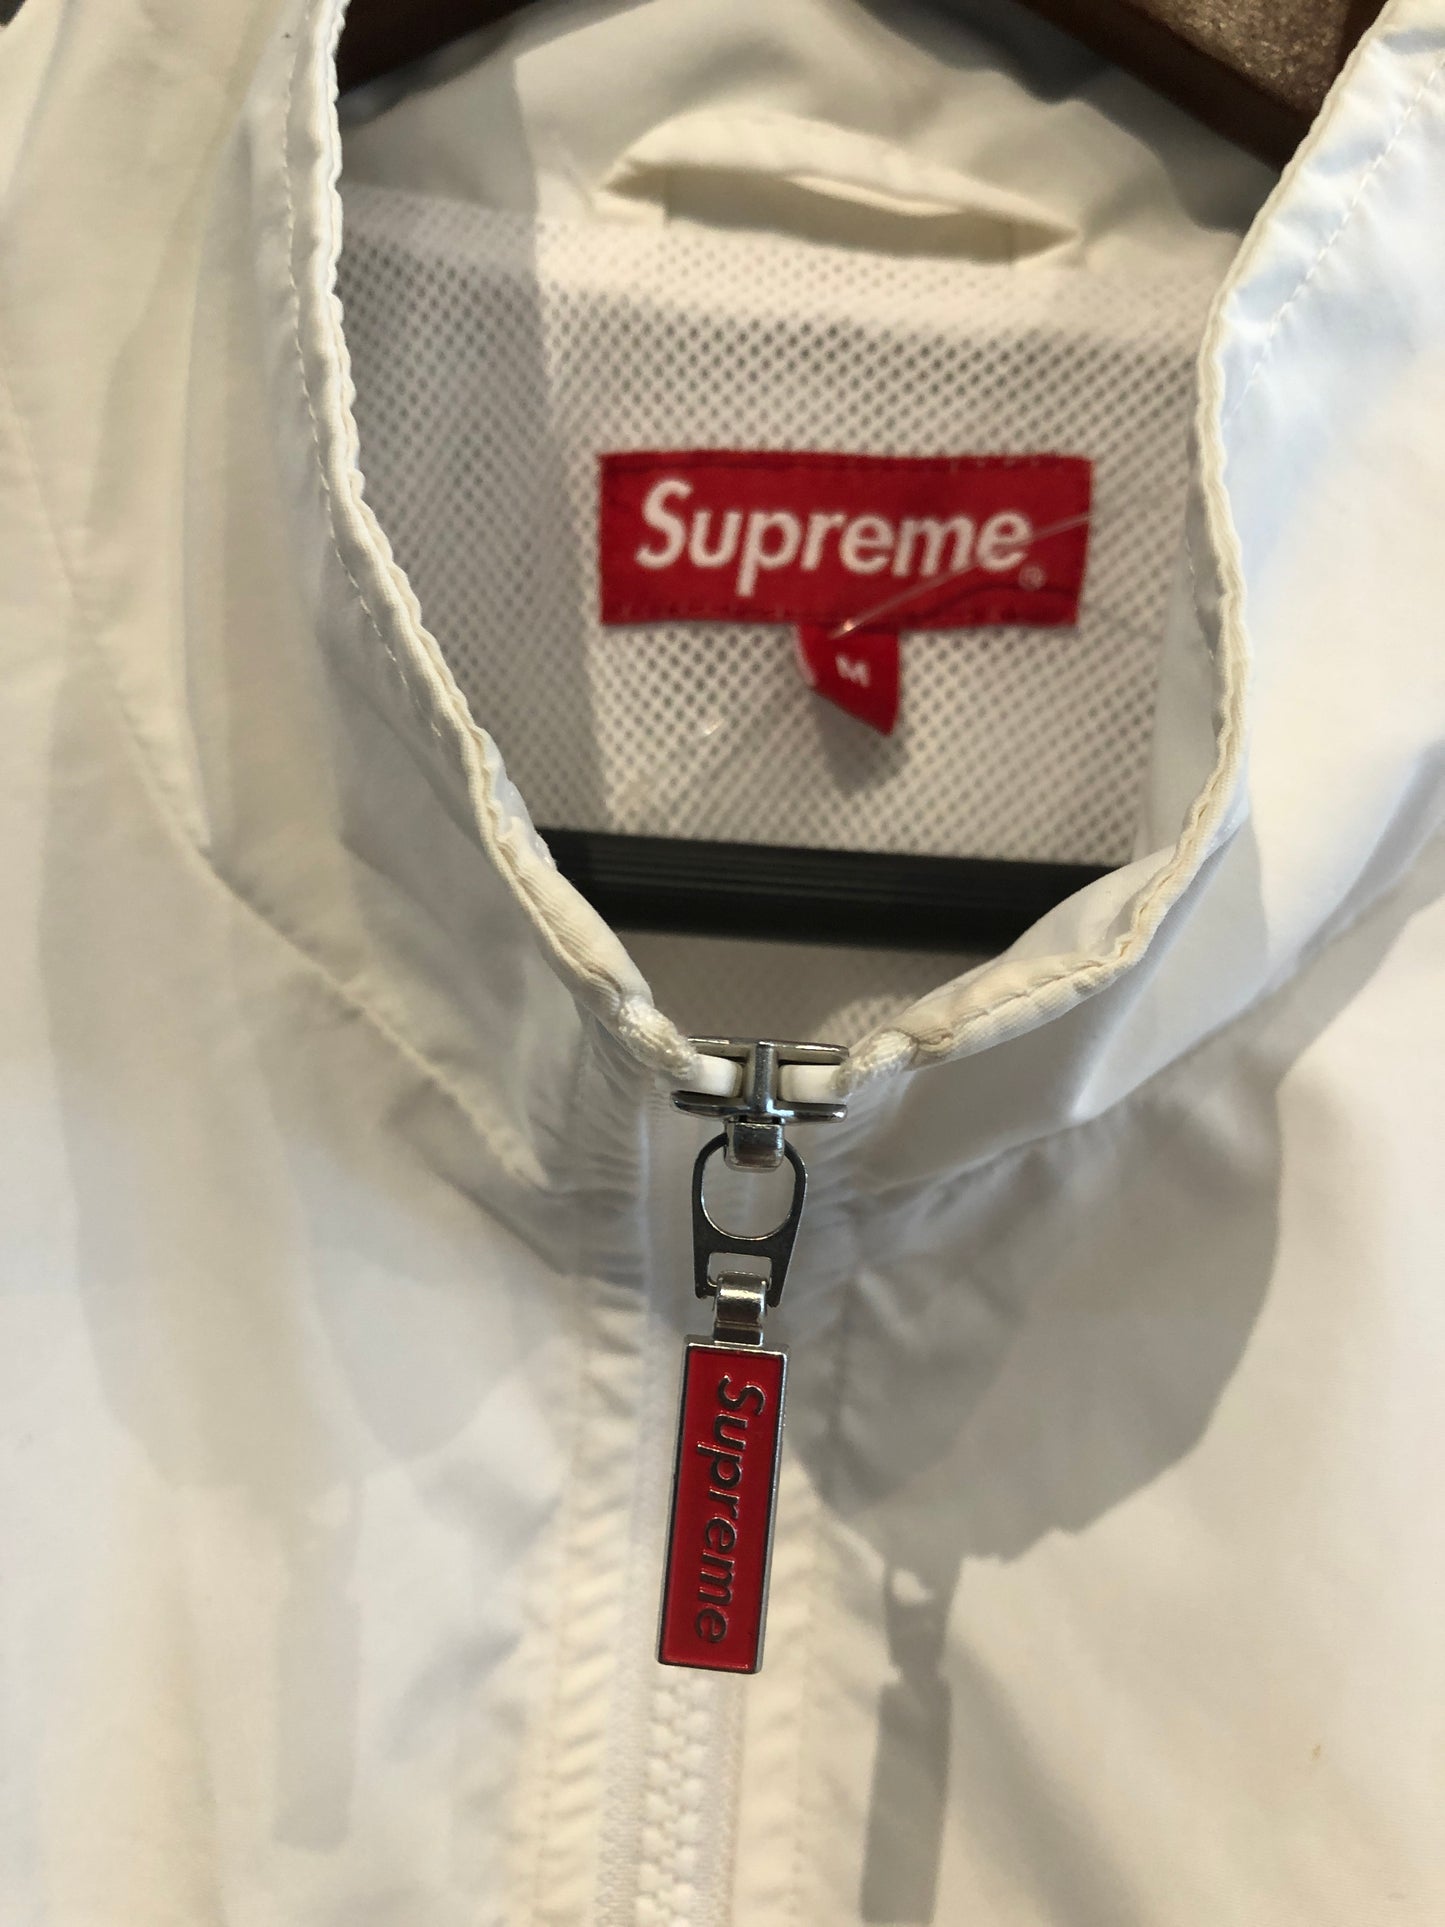 Supreme 3M Reflective Stripe Track Jacket size medium